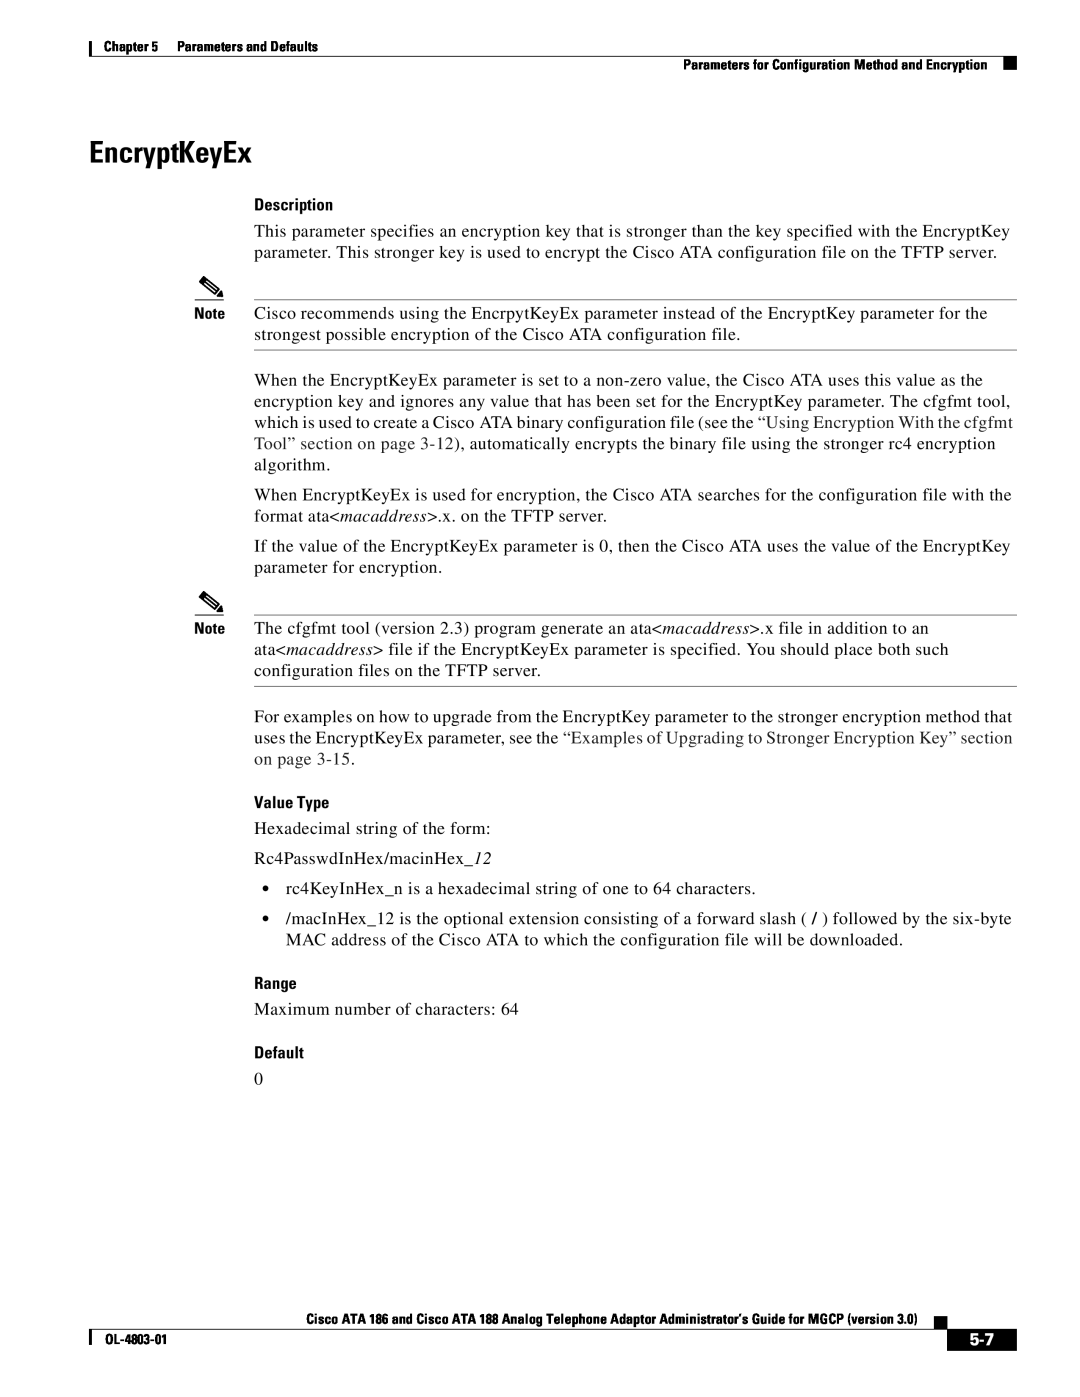 Cisco Systems ATA 186 manual EncryptKeyEx, Description, Value Type, Range, Default 